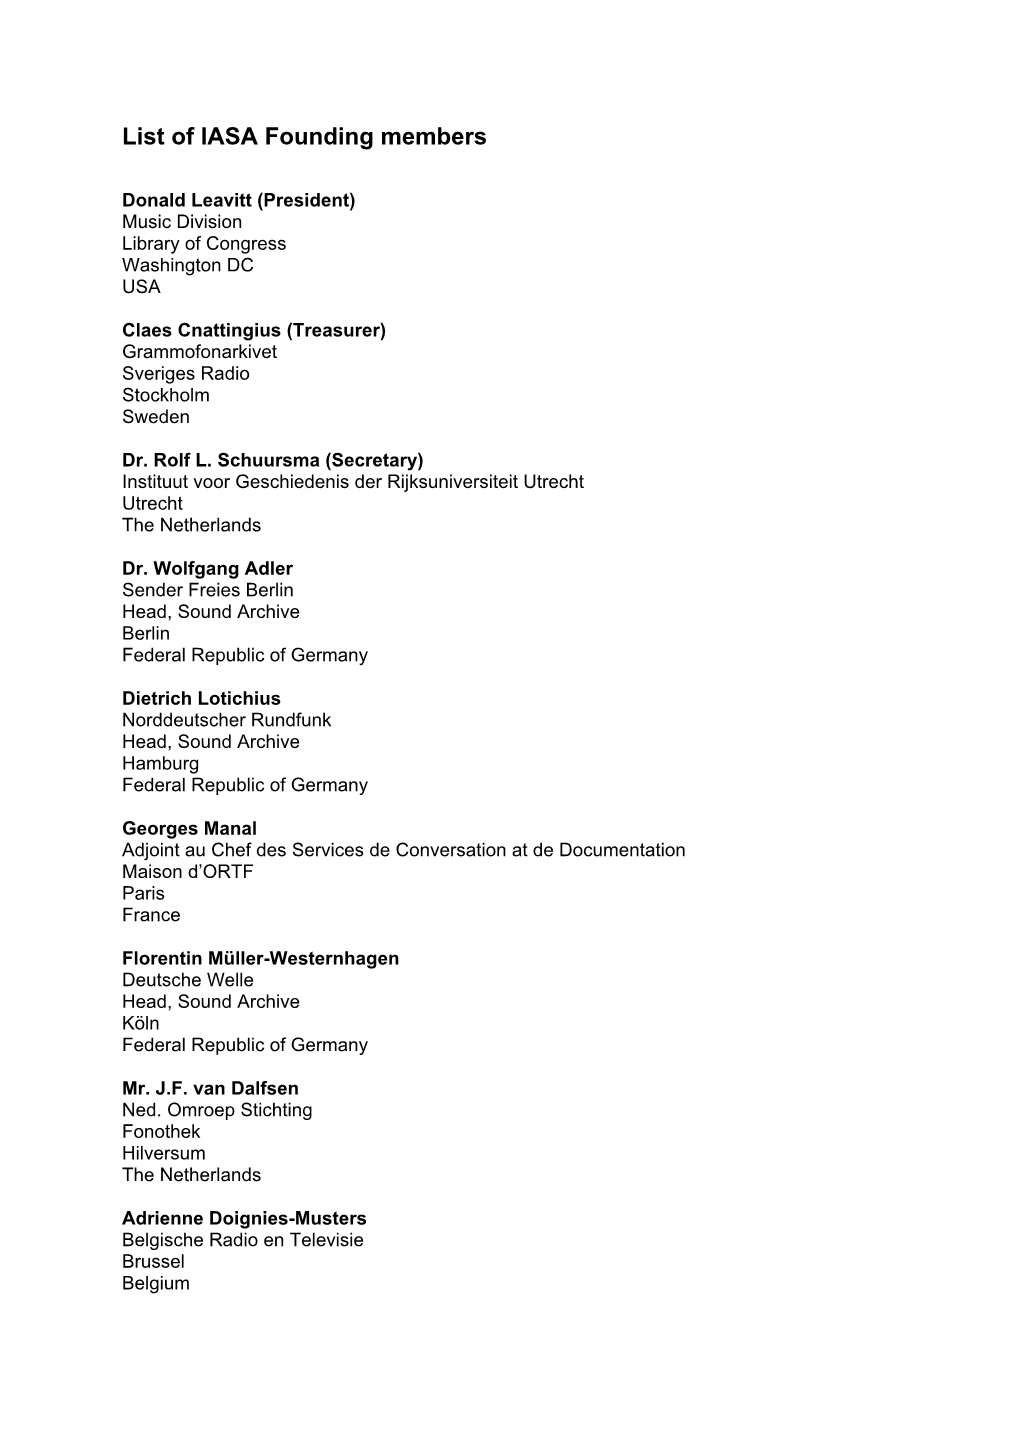 List of IASA Founding Members